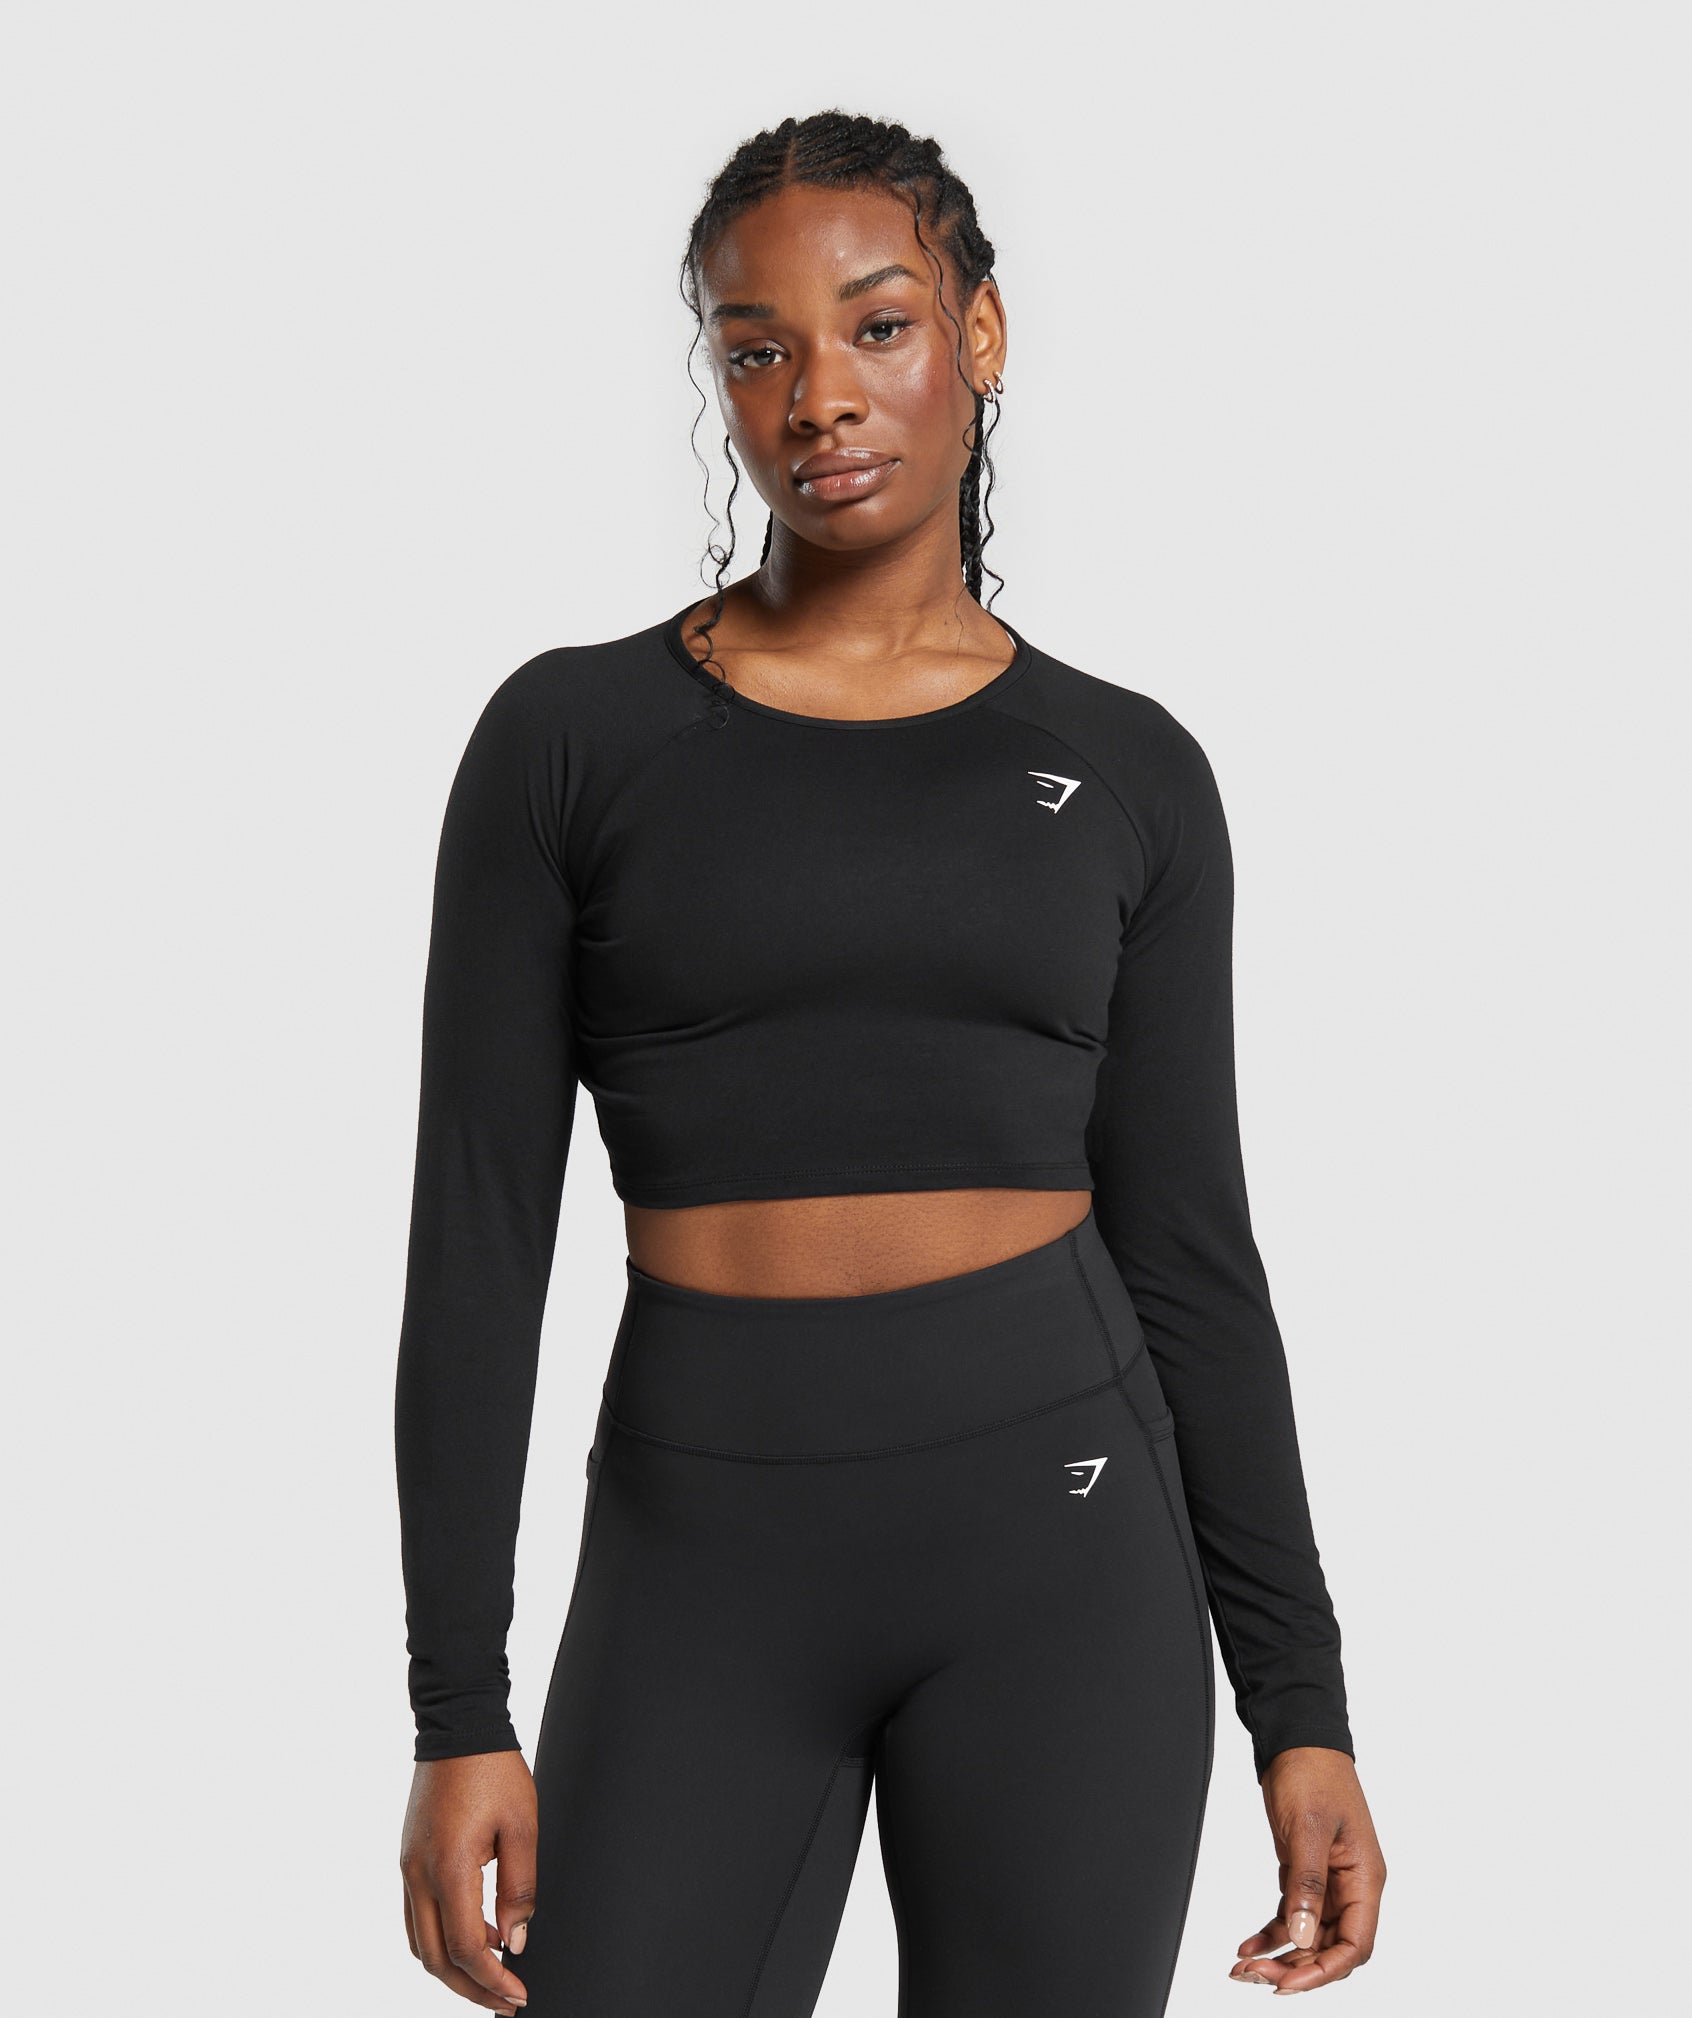 Gymshark Flex Sports Long Sleeve Crop Top - Black